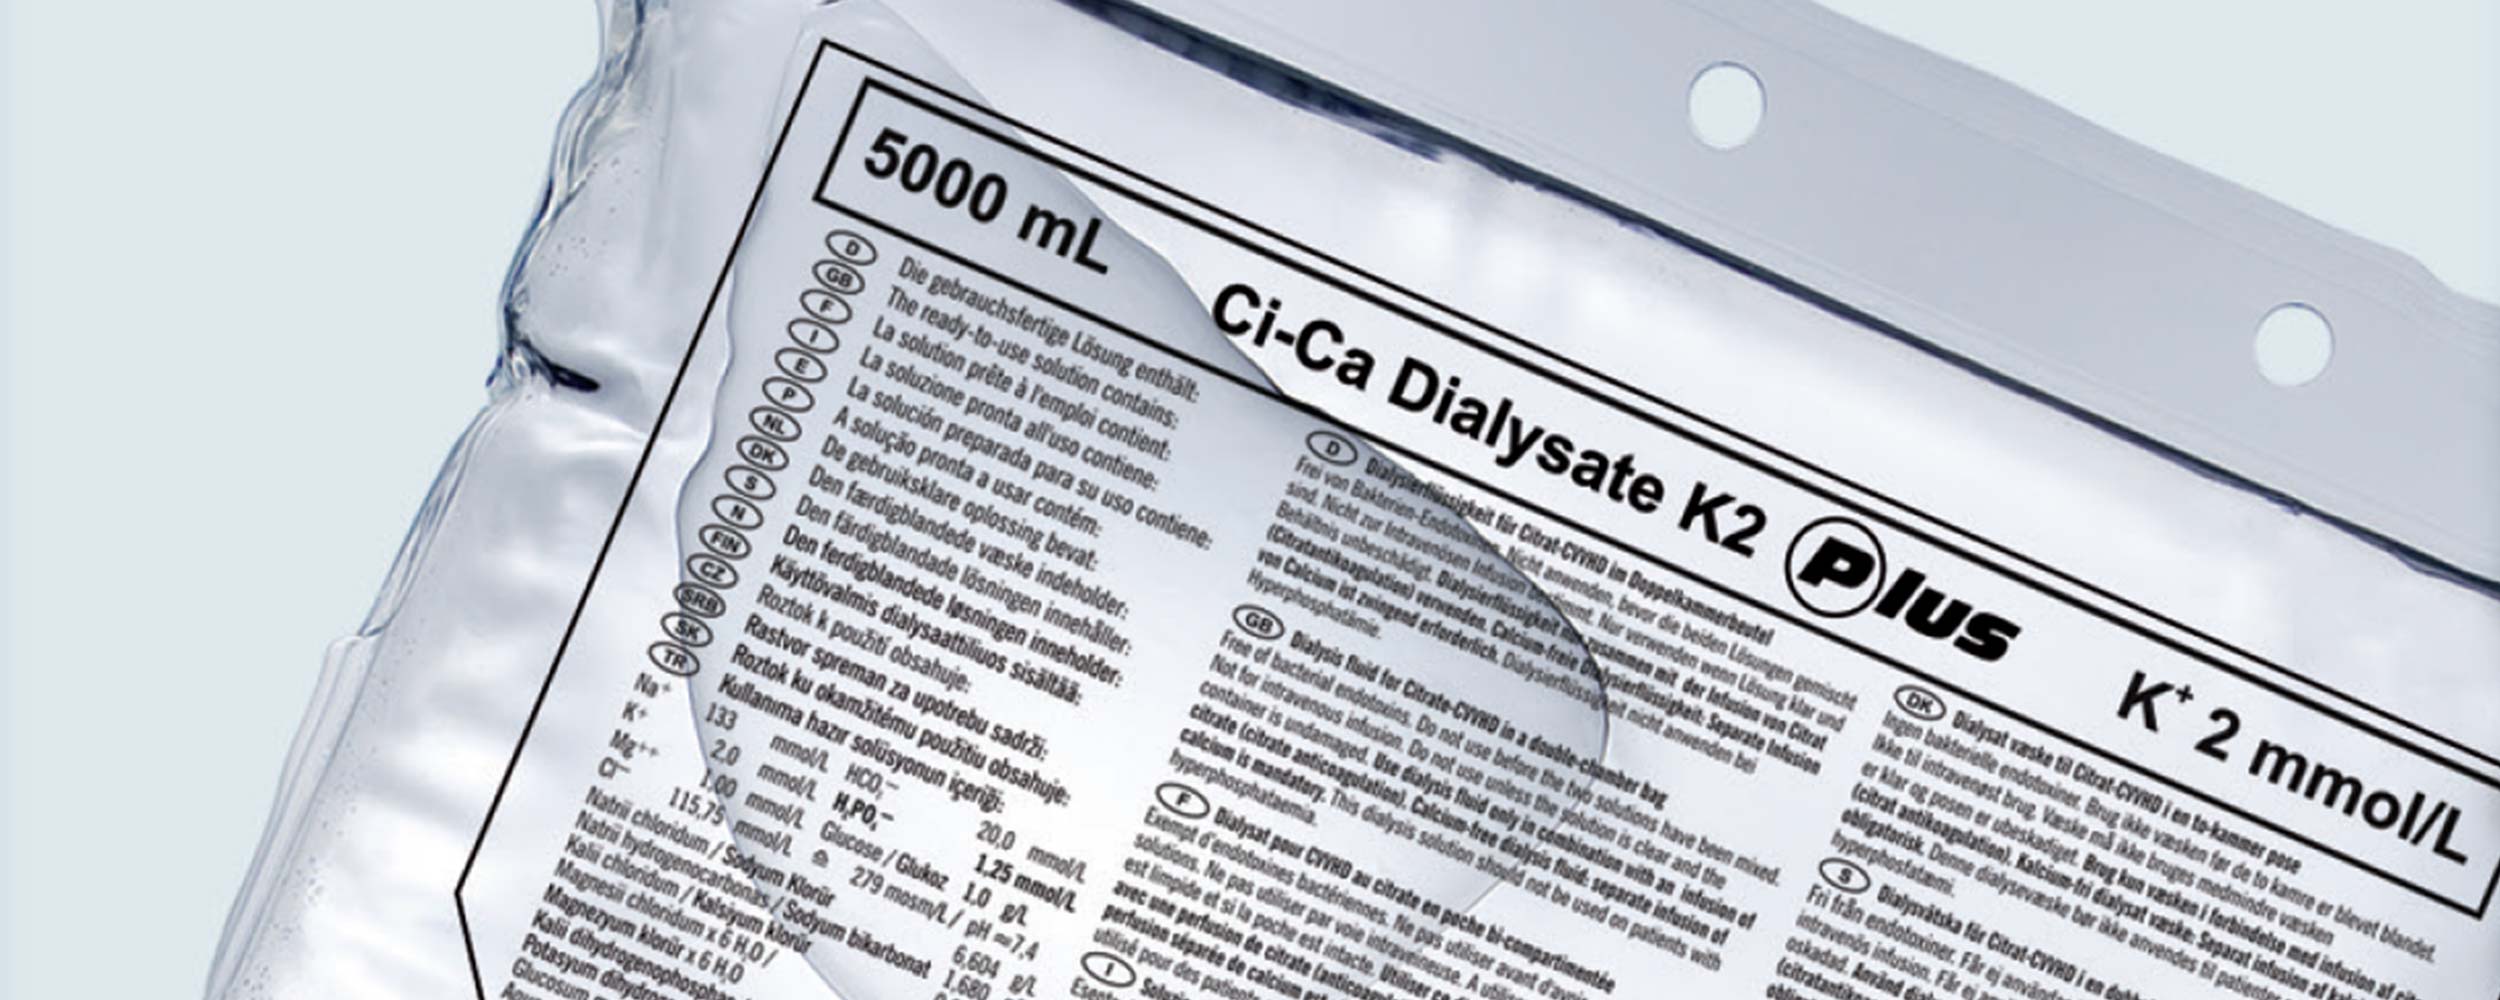 Диализирующий раствор Ci-Ca® Dialysate Plus